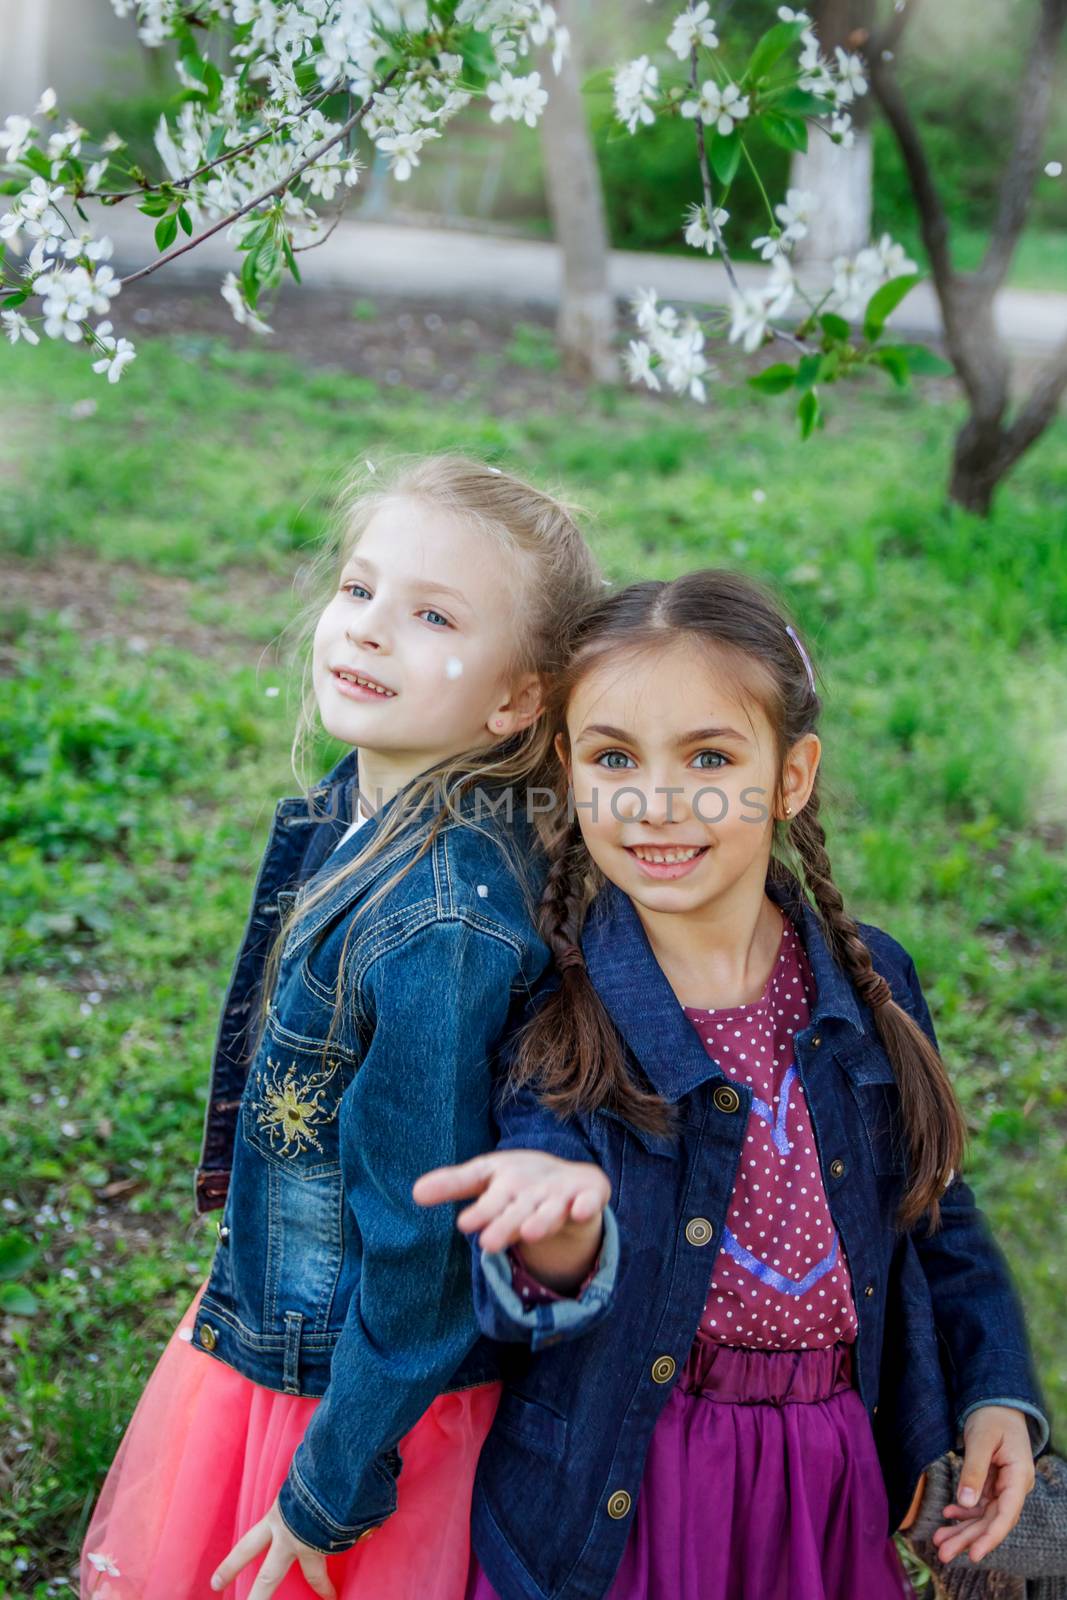 Two happy girls enjoying falling petals in spring garden